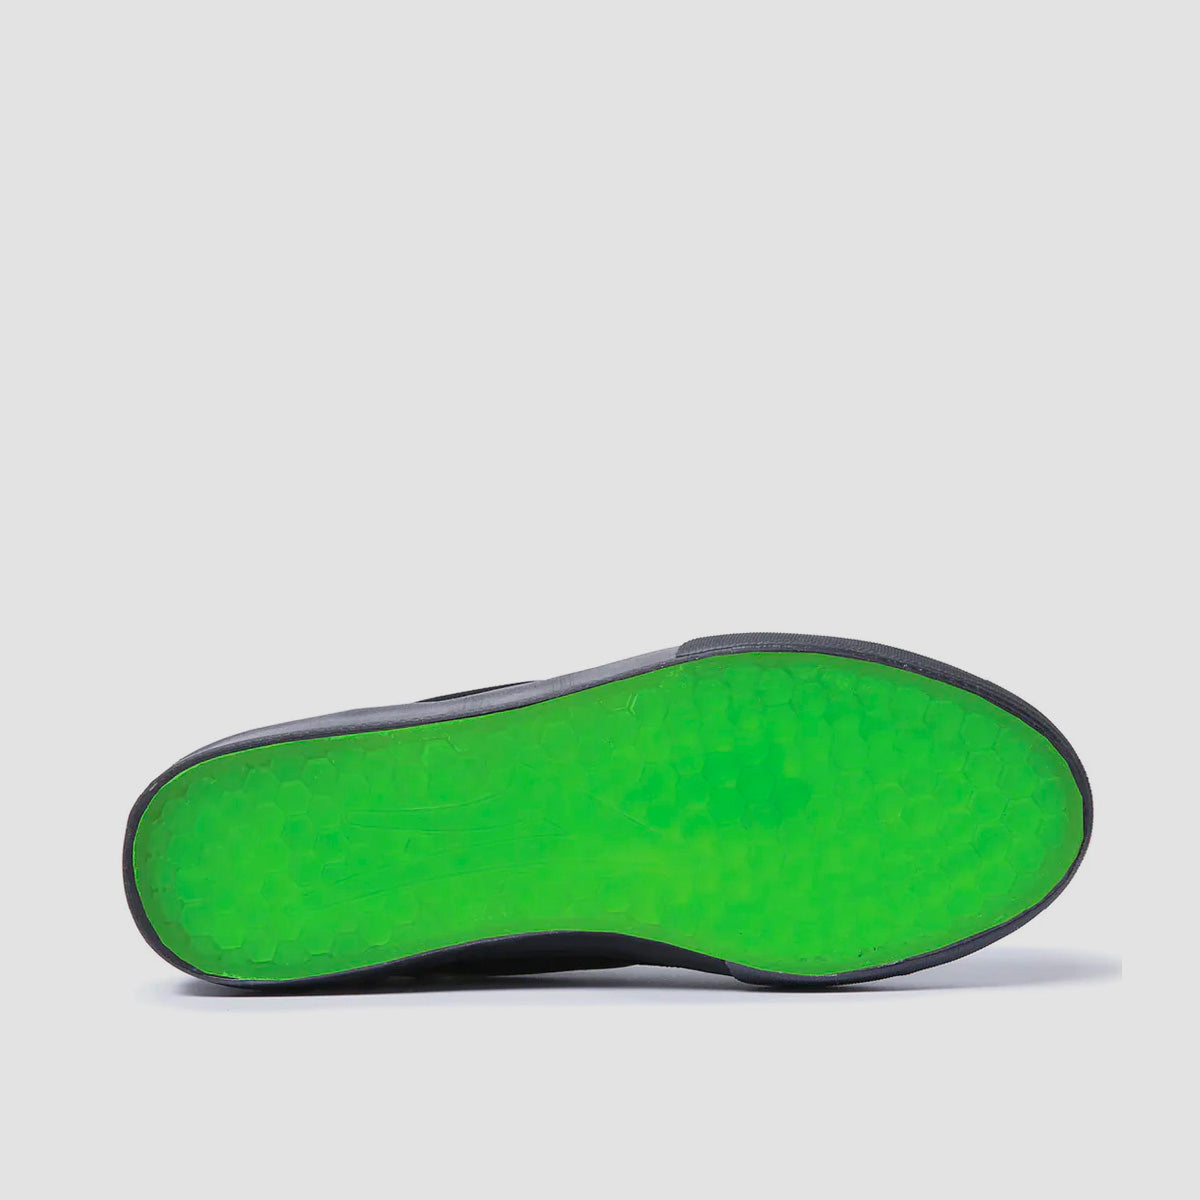 Lakai X Yeah Right! Staple Shoes - Black/UV Green Suede